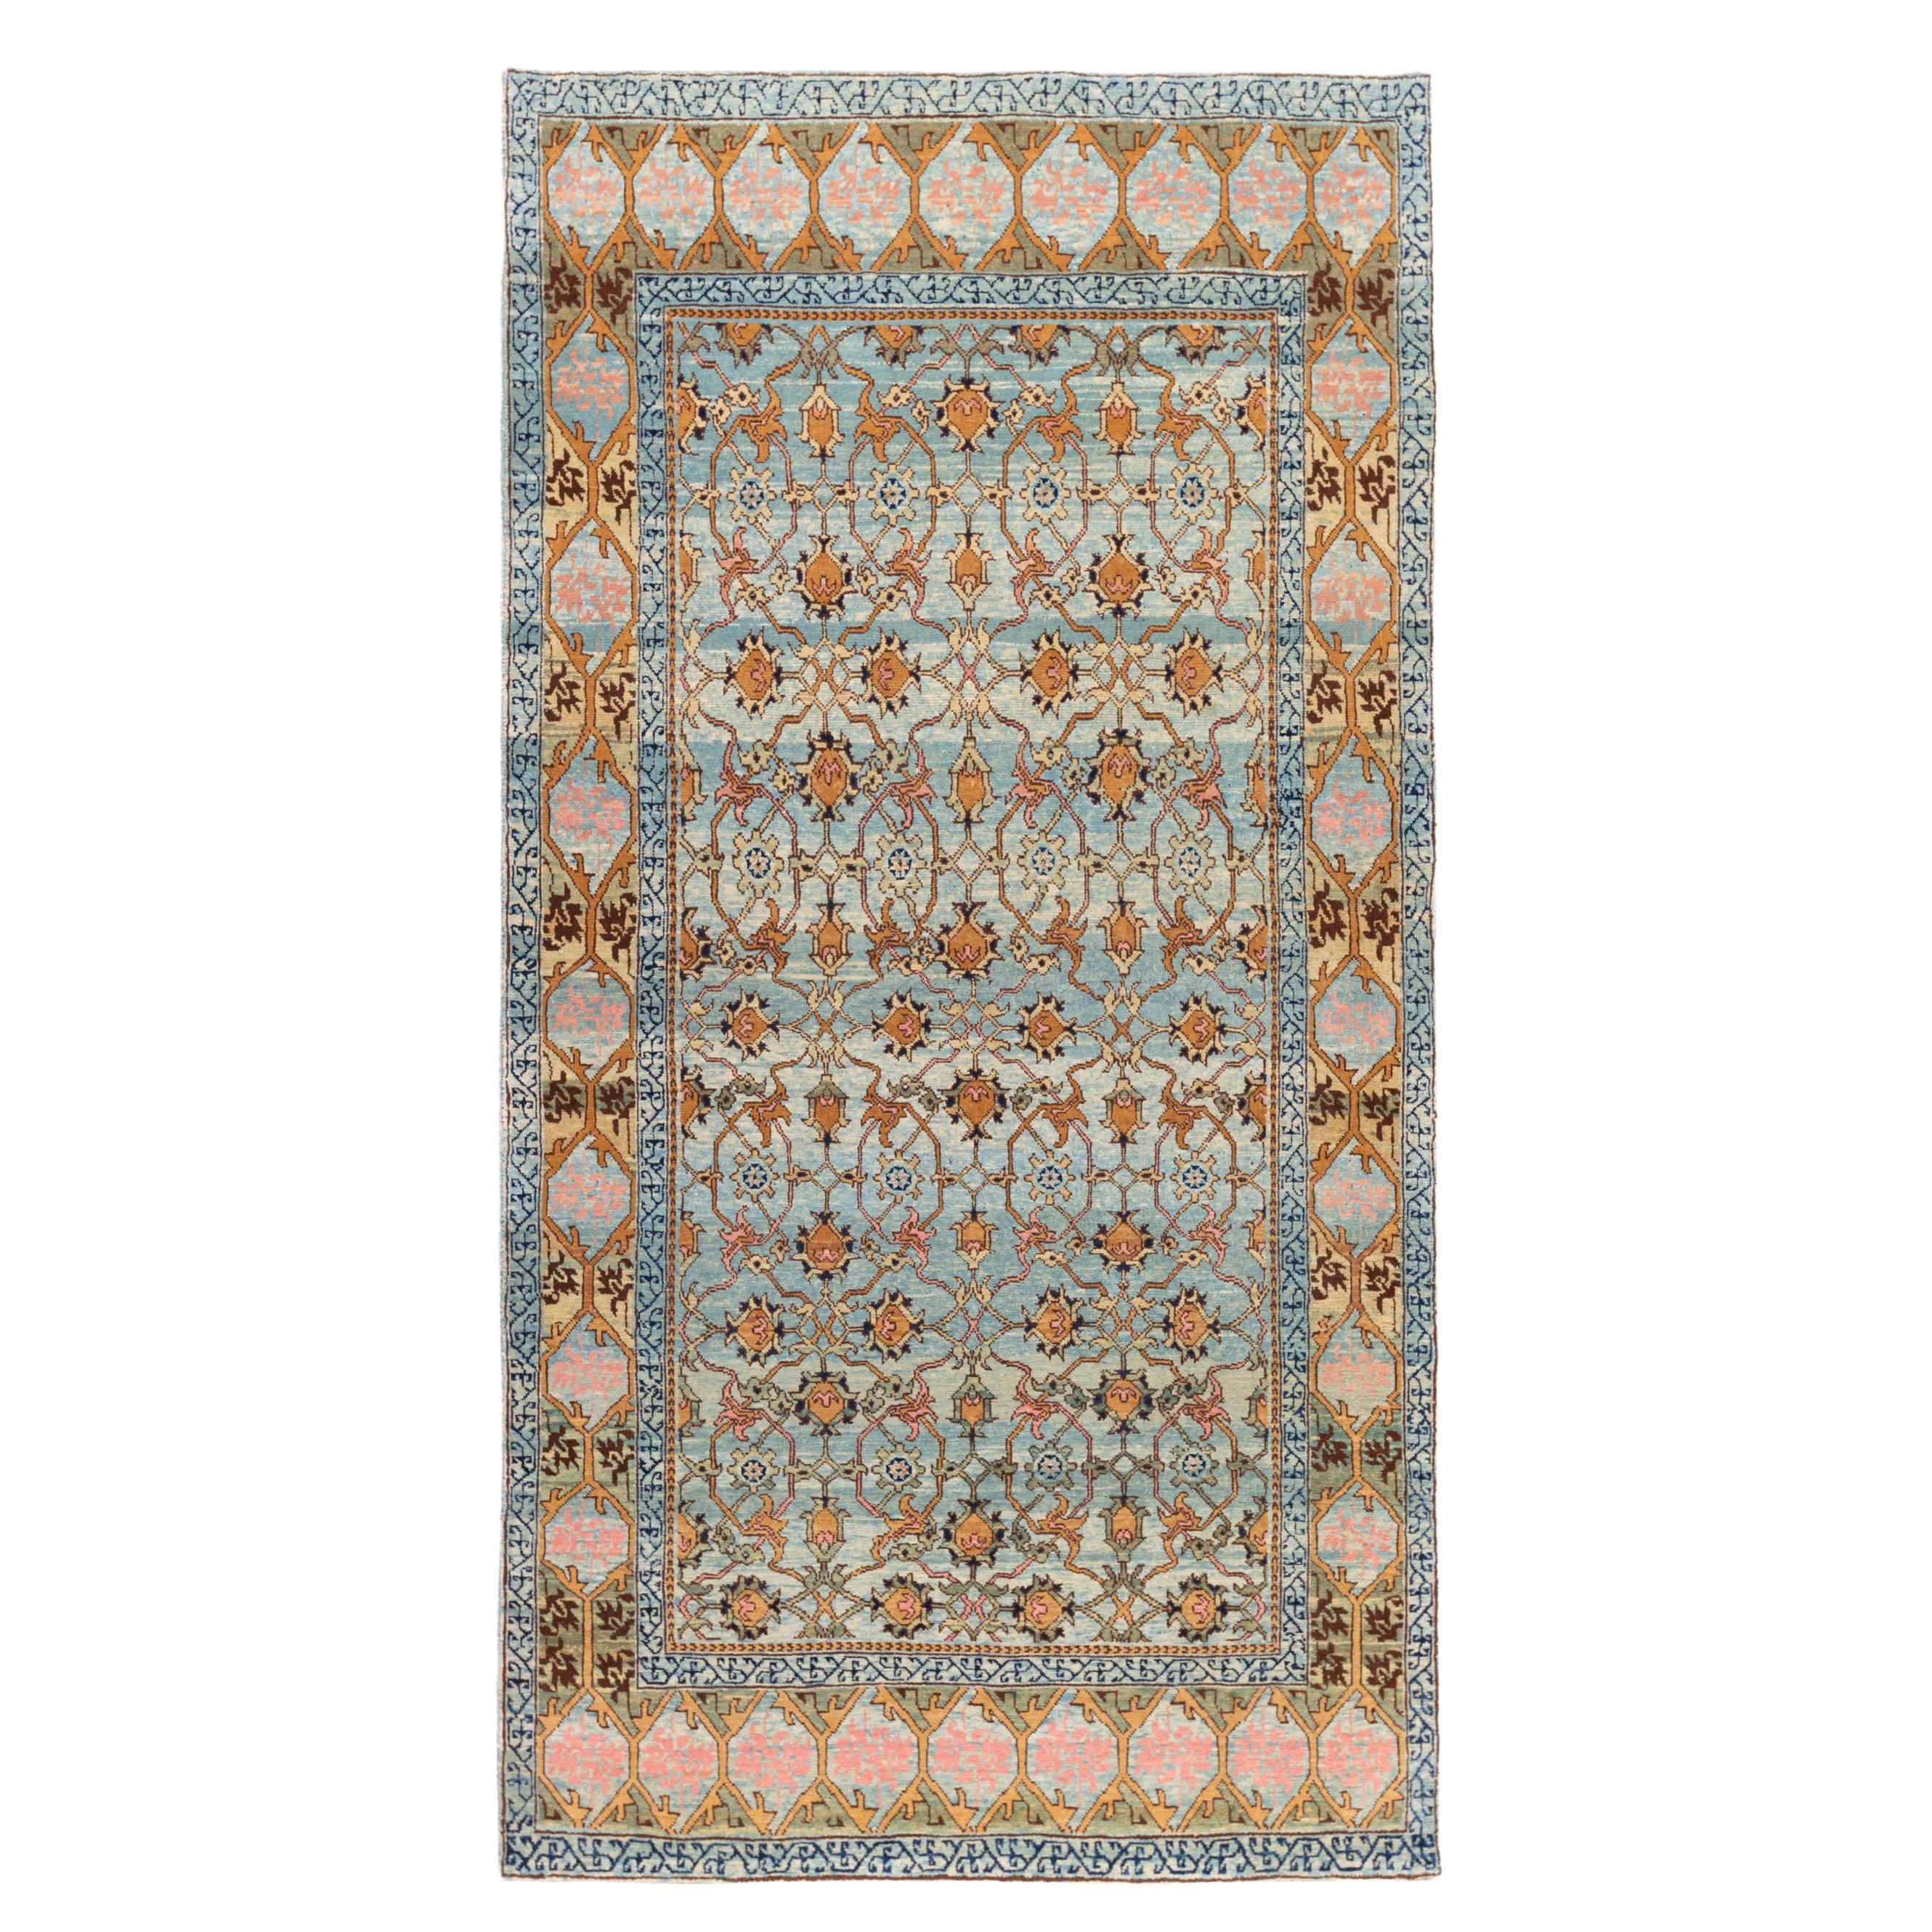 Tapis Ararat Mamluk avec motif treillis, tapis néo-renaissance ancien teint en naturel